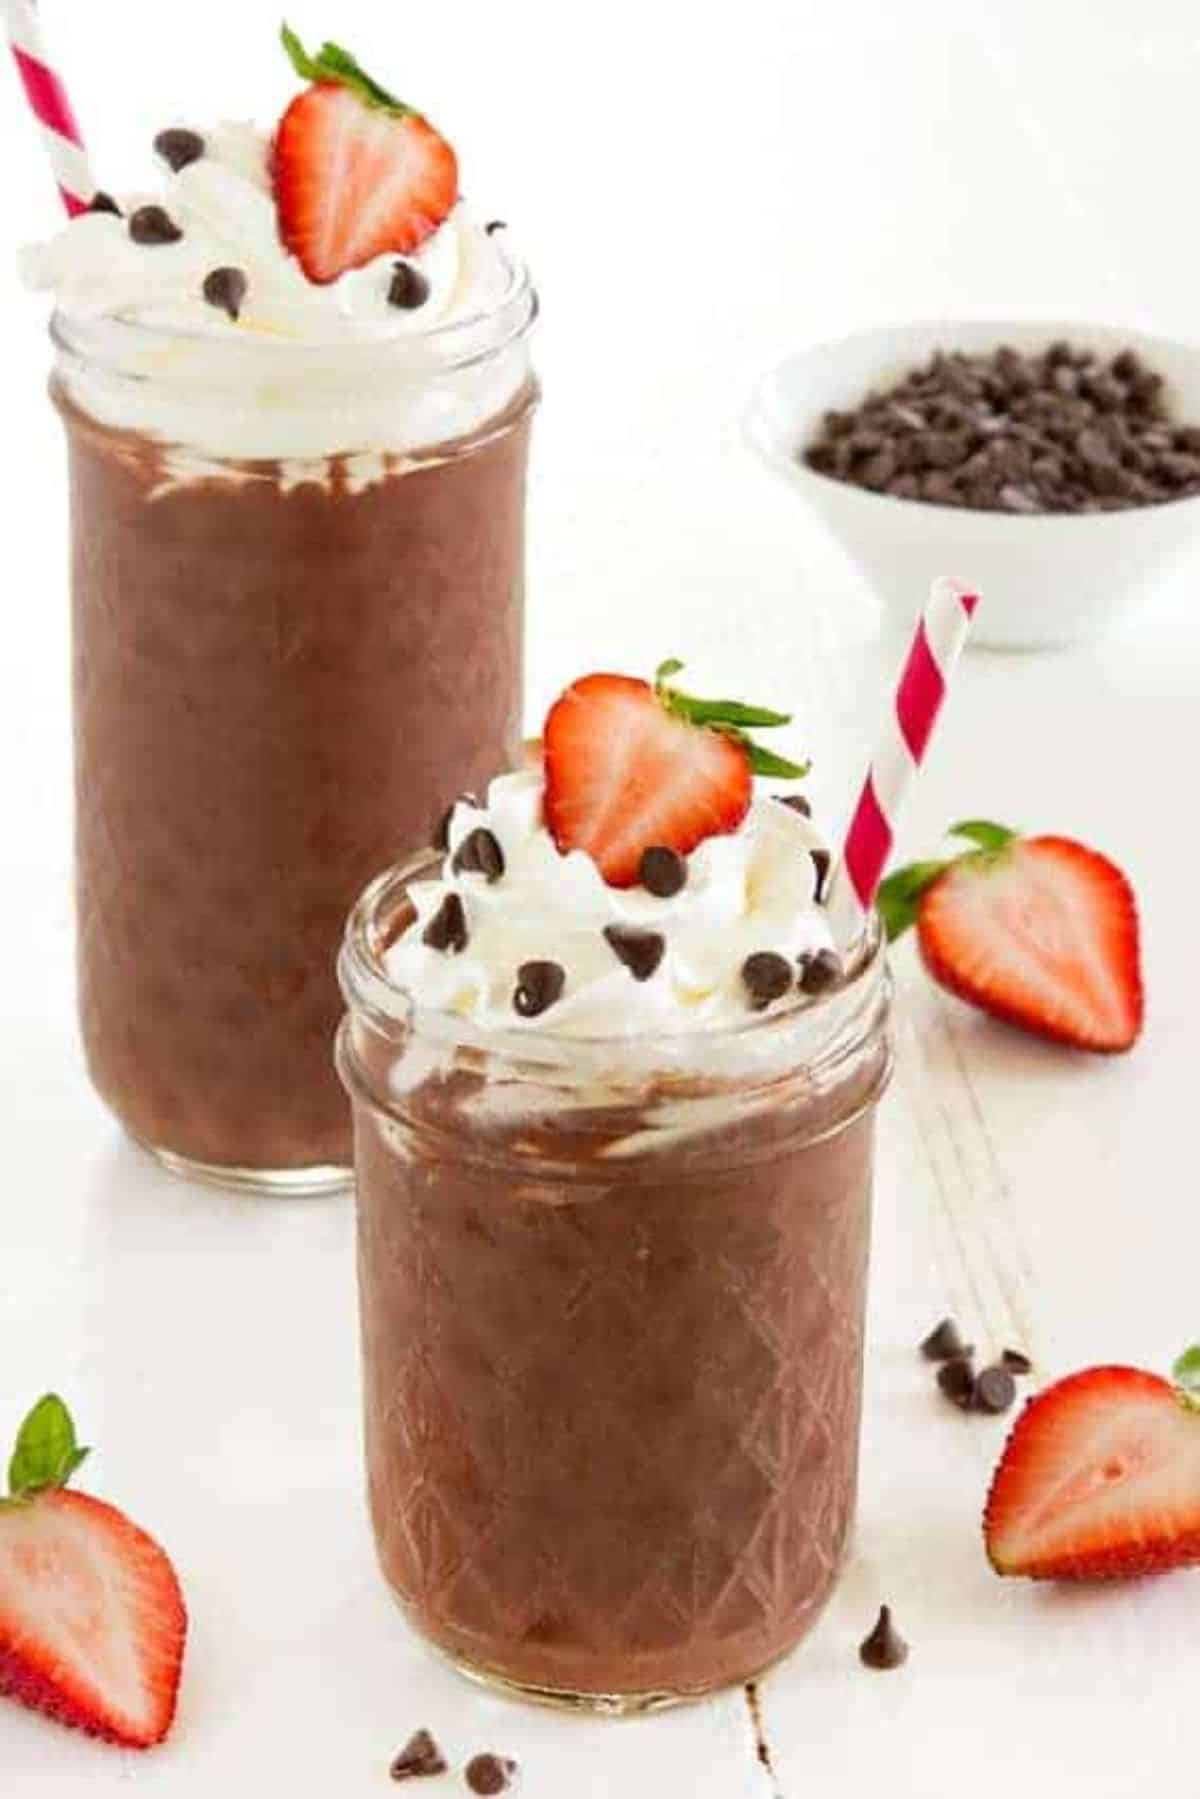 Fresh strawberry chocolate dessert smoothies in glass jars with straws.